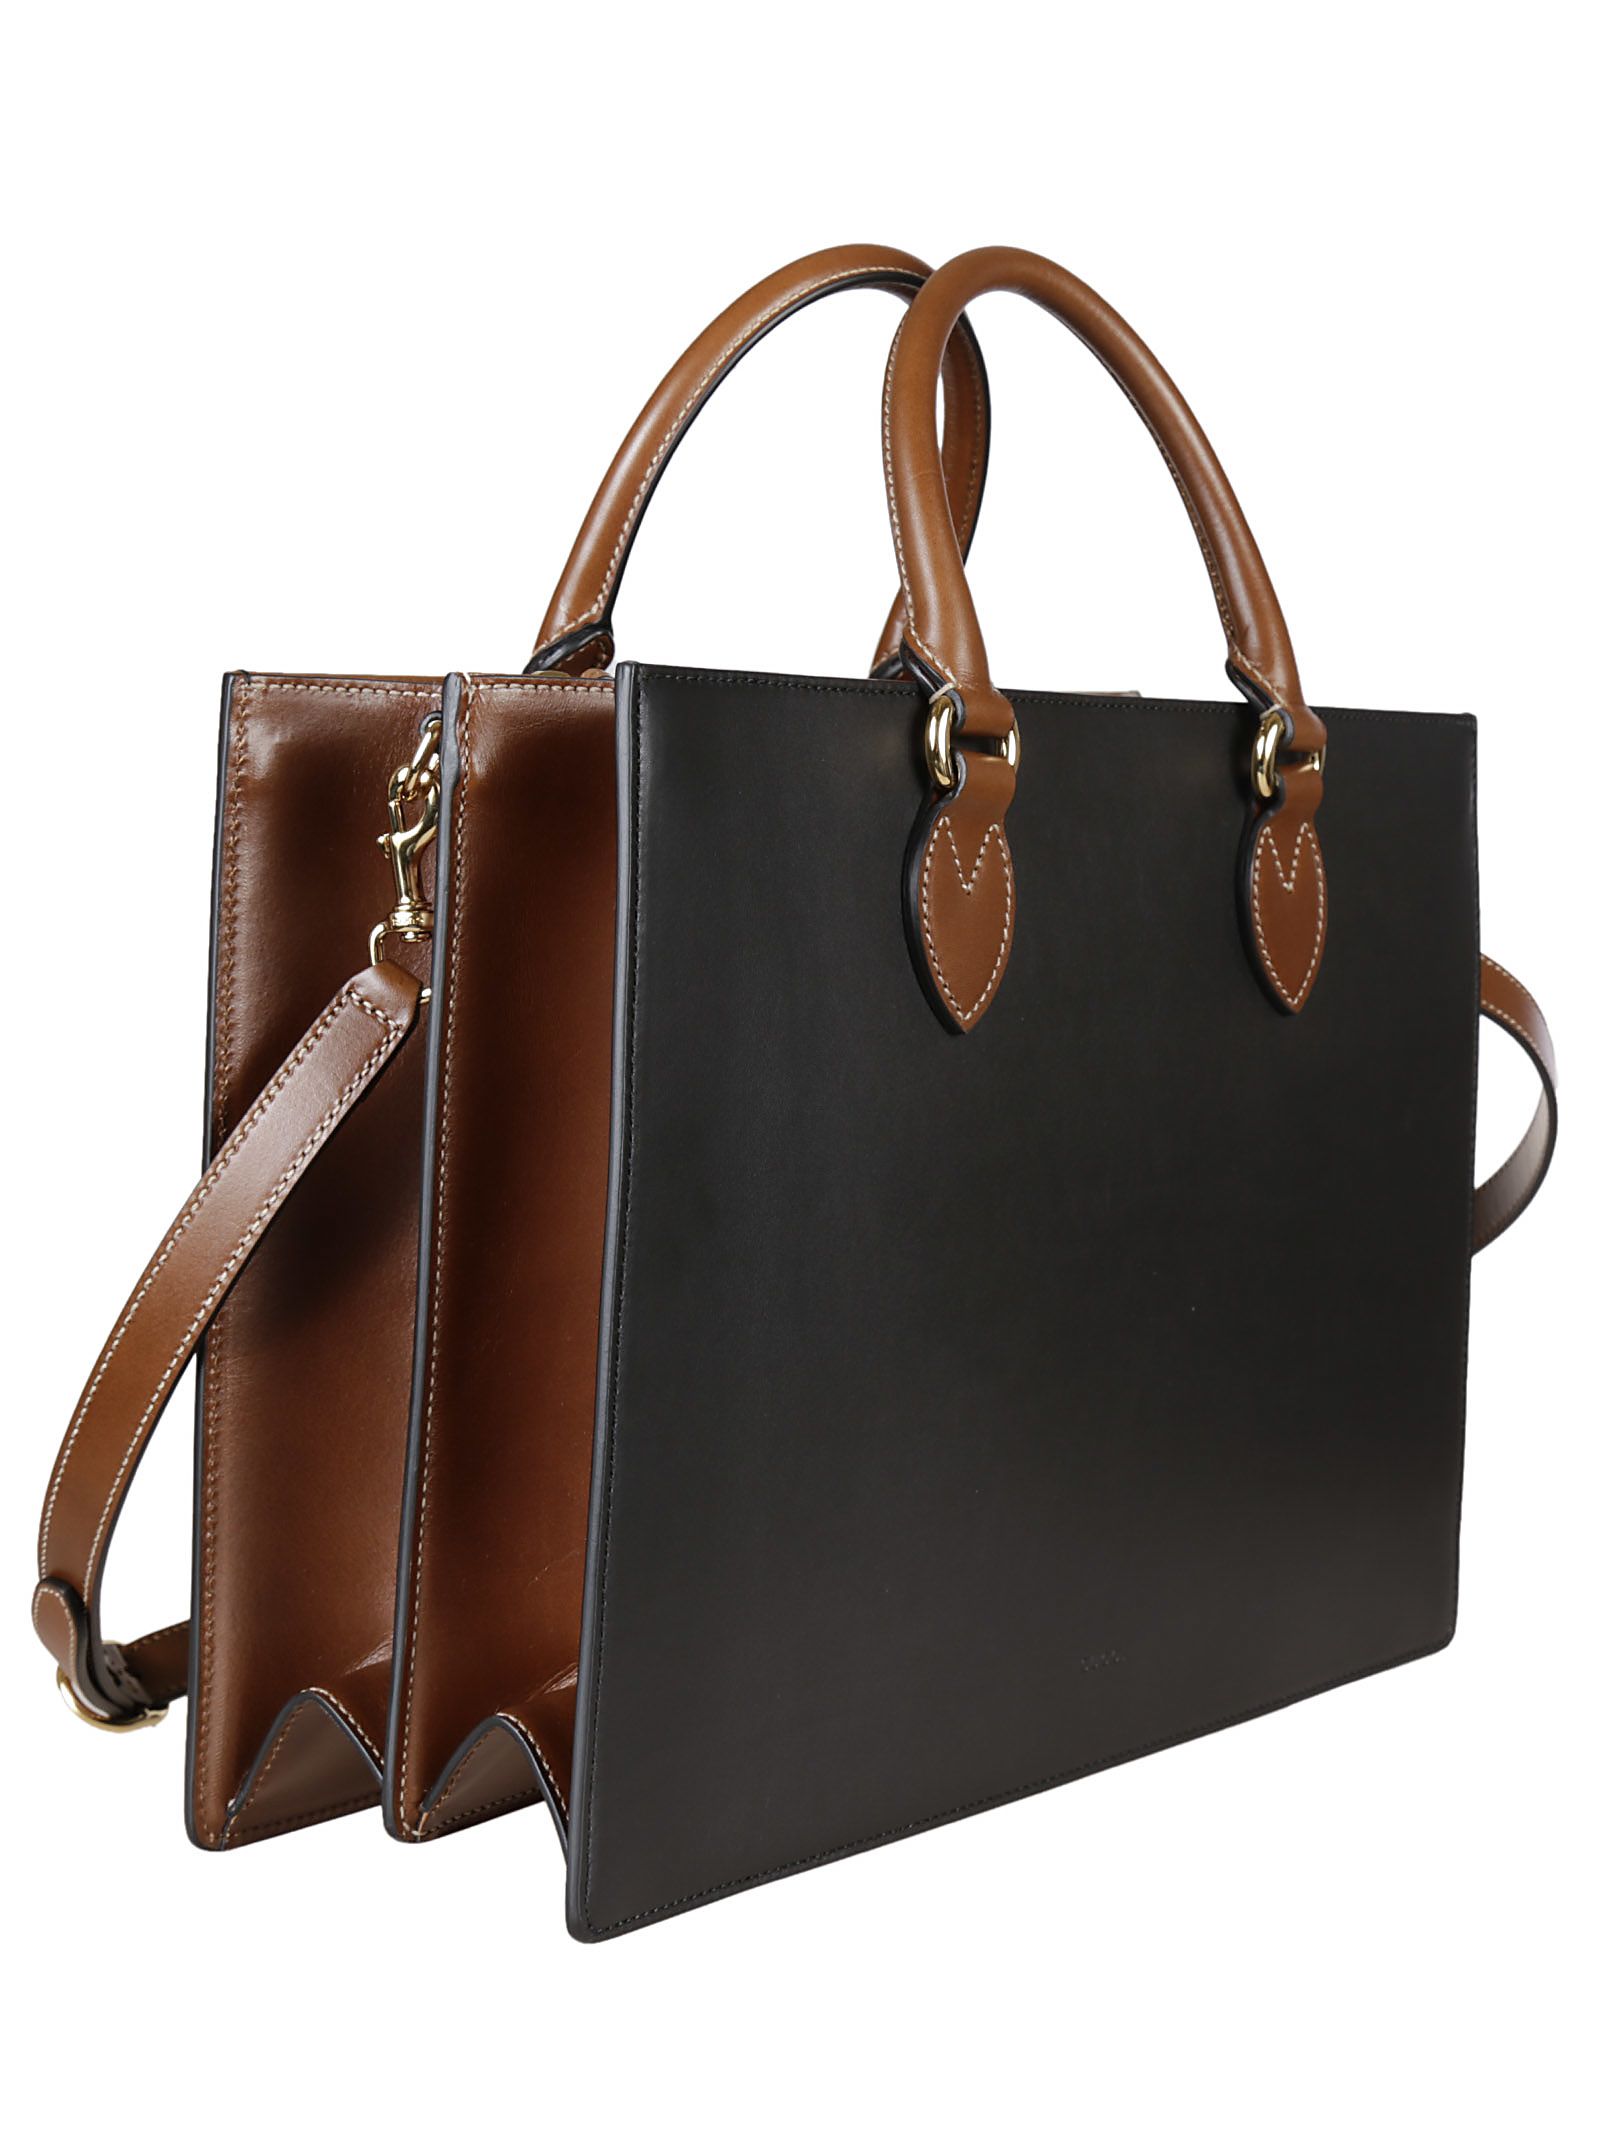 italist | Best price in the market for Gucci Gucci Handbag - Black - 592823 | italist